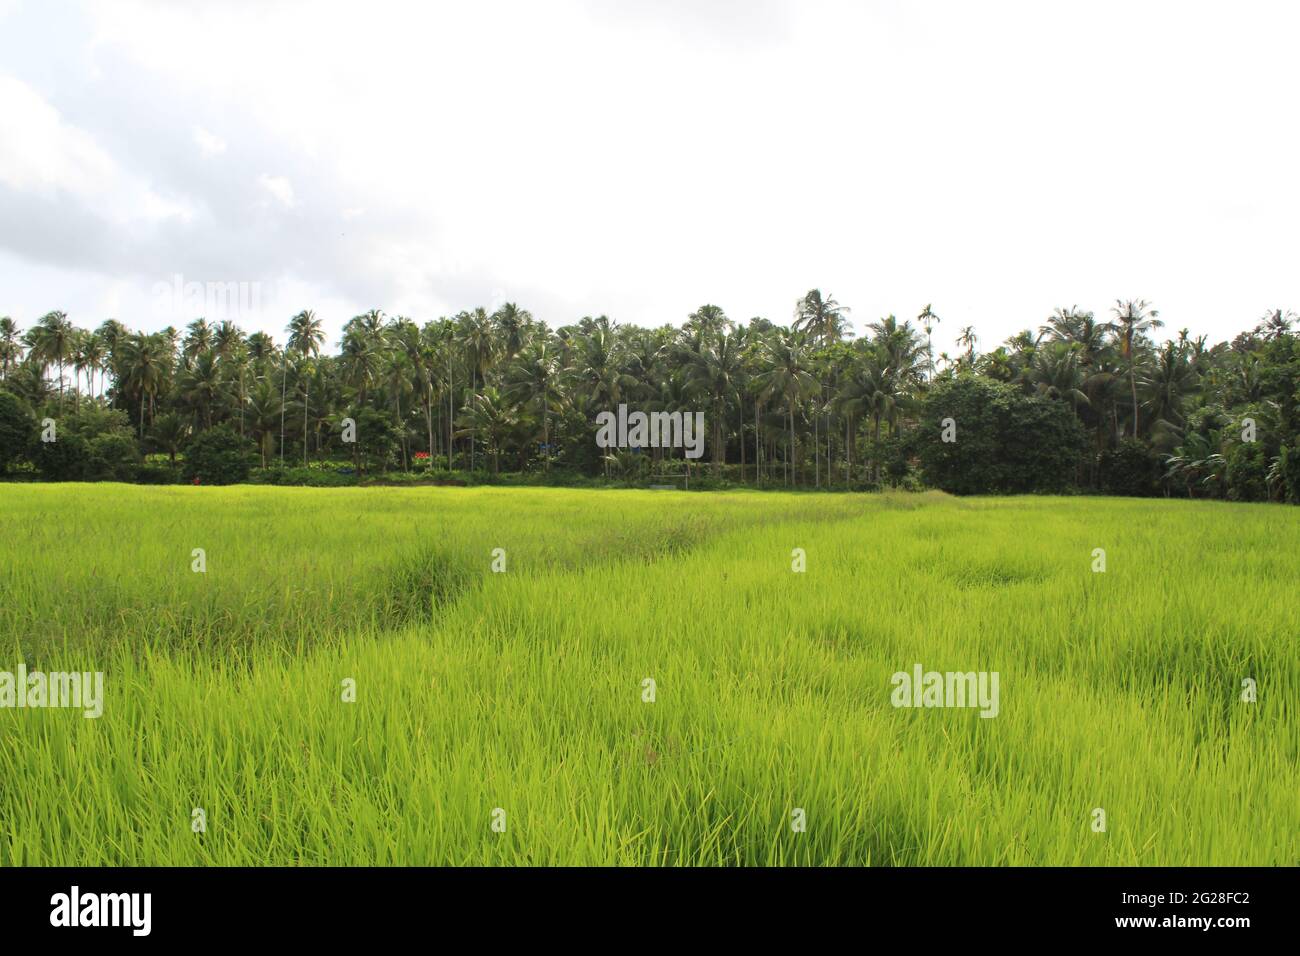 Schönes offenes Reis-/Weizenfeld in Kerala, Südindien. Landschaft von Kerala. Kerala Farms. Ackerland in Südindien. Bright Green Farm in Kerala Stockfoto